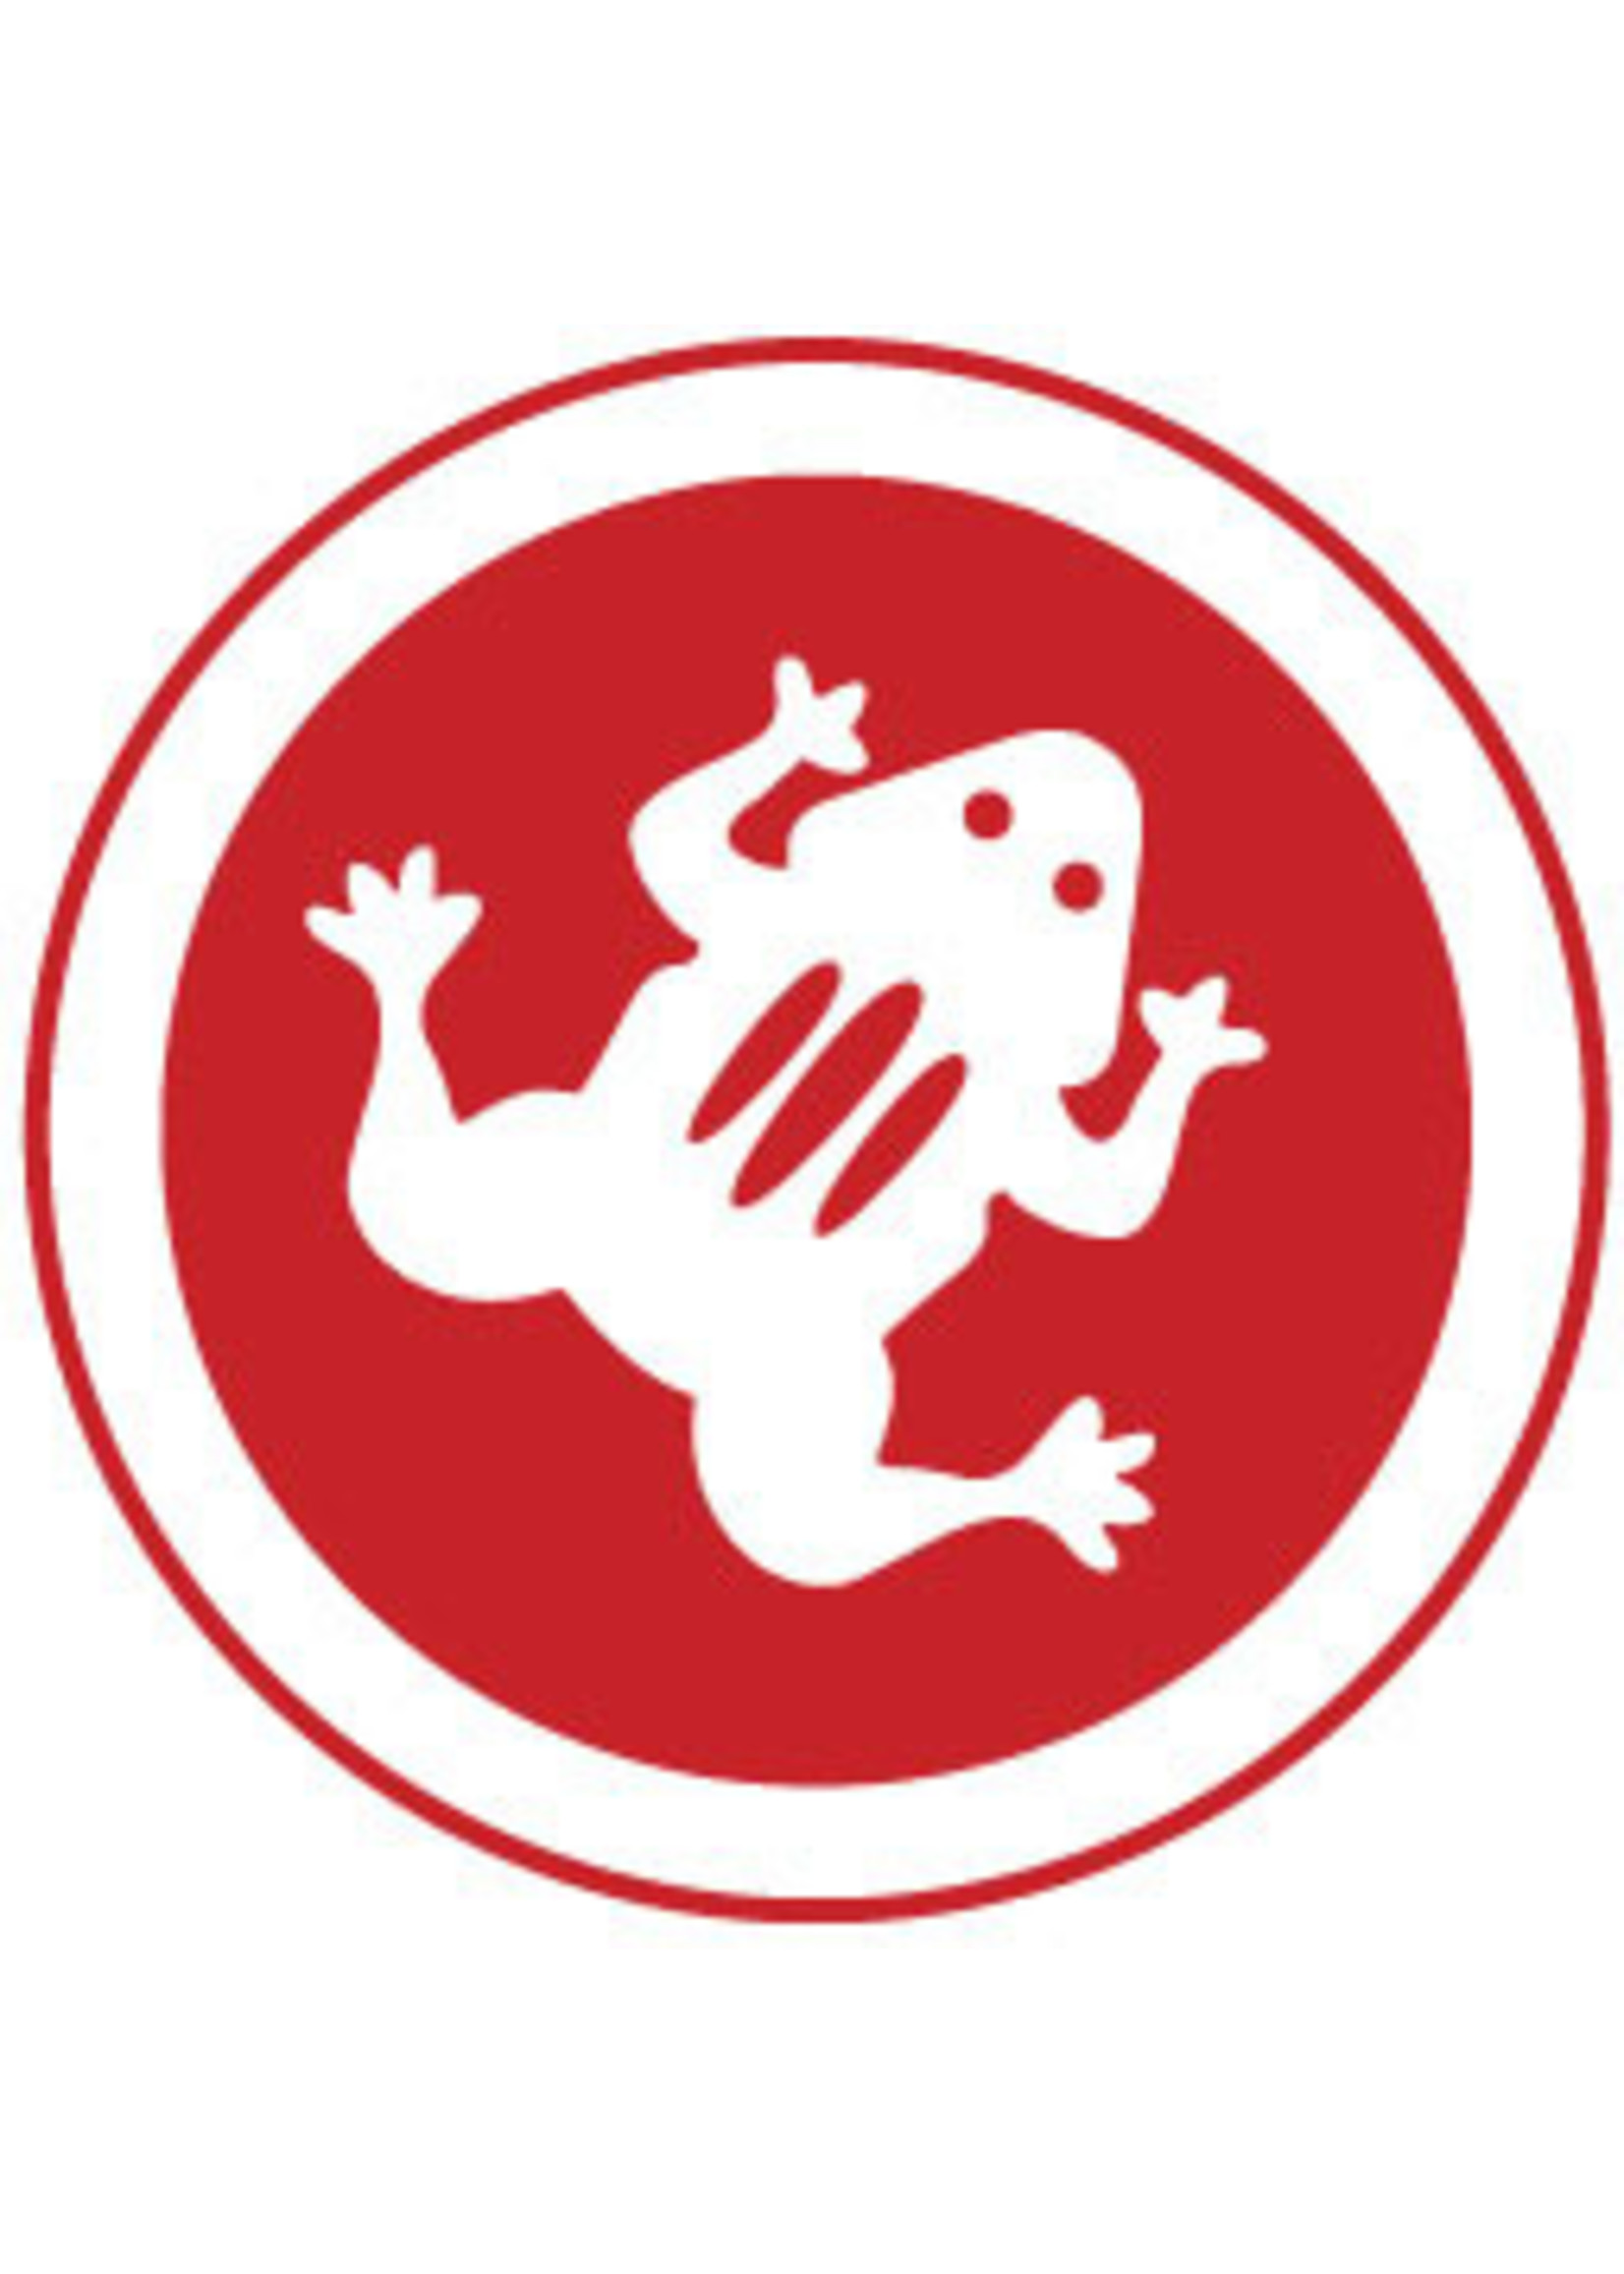 Red bali frog S009 Redbalifrog Sugar Skull